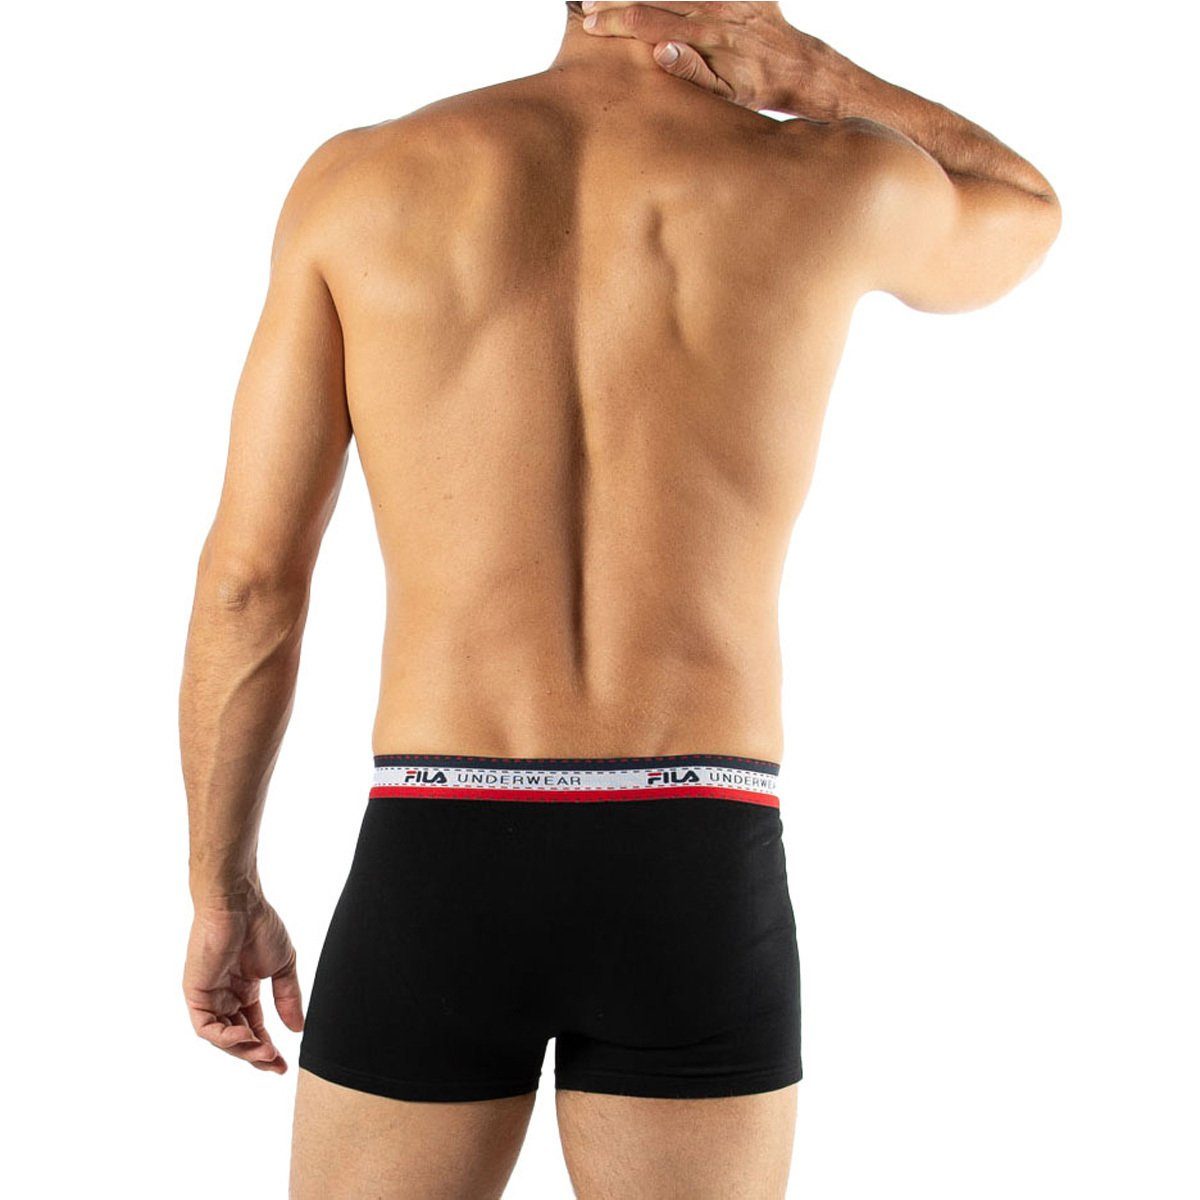 Boxer 4er Boxer Shorts, Pack - Schwarz Logobund, Cotton Fila Herren